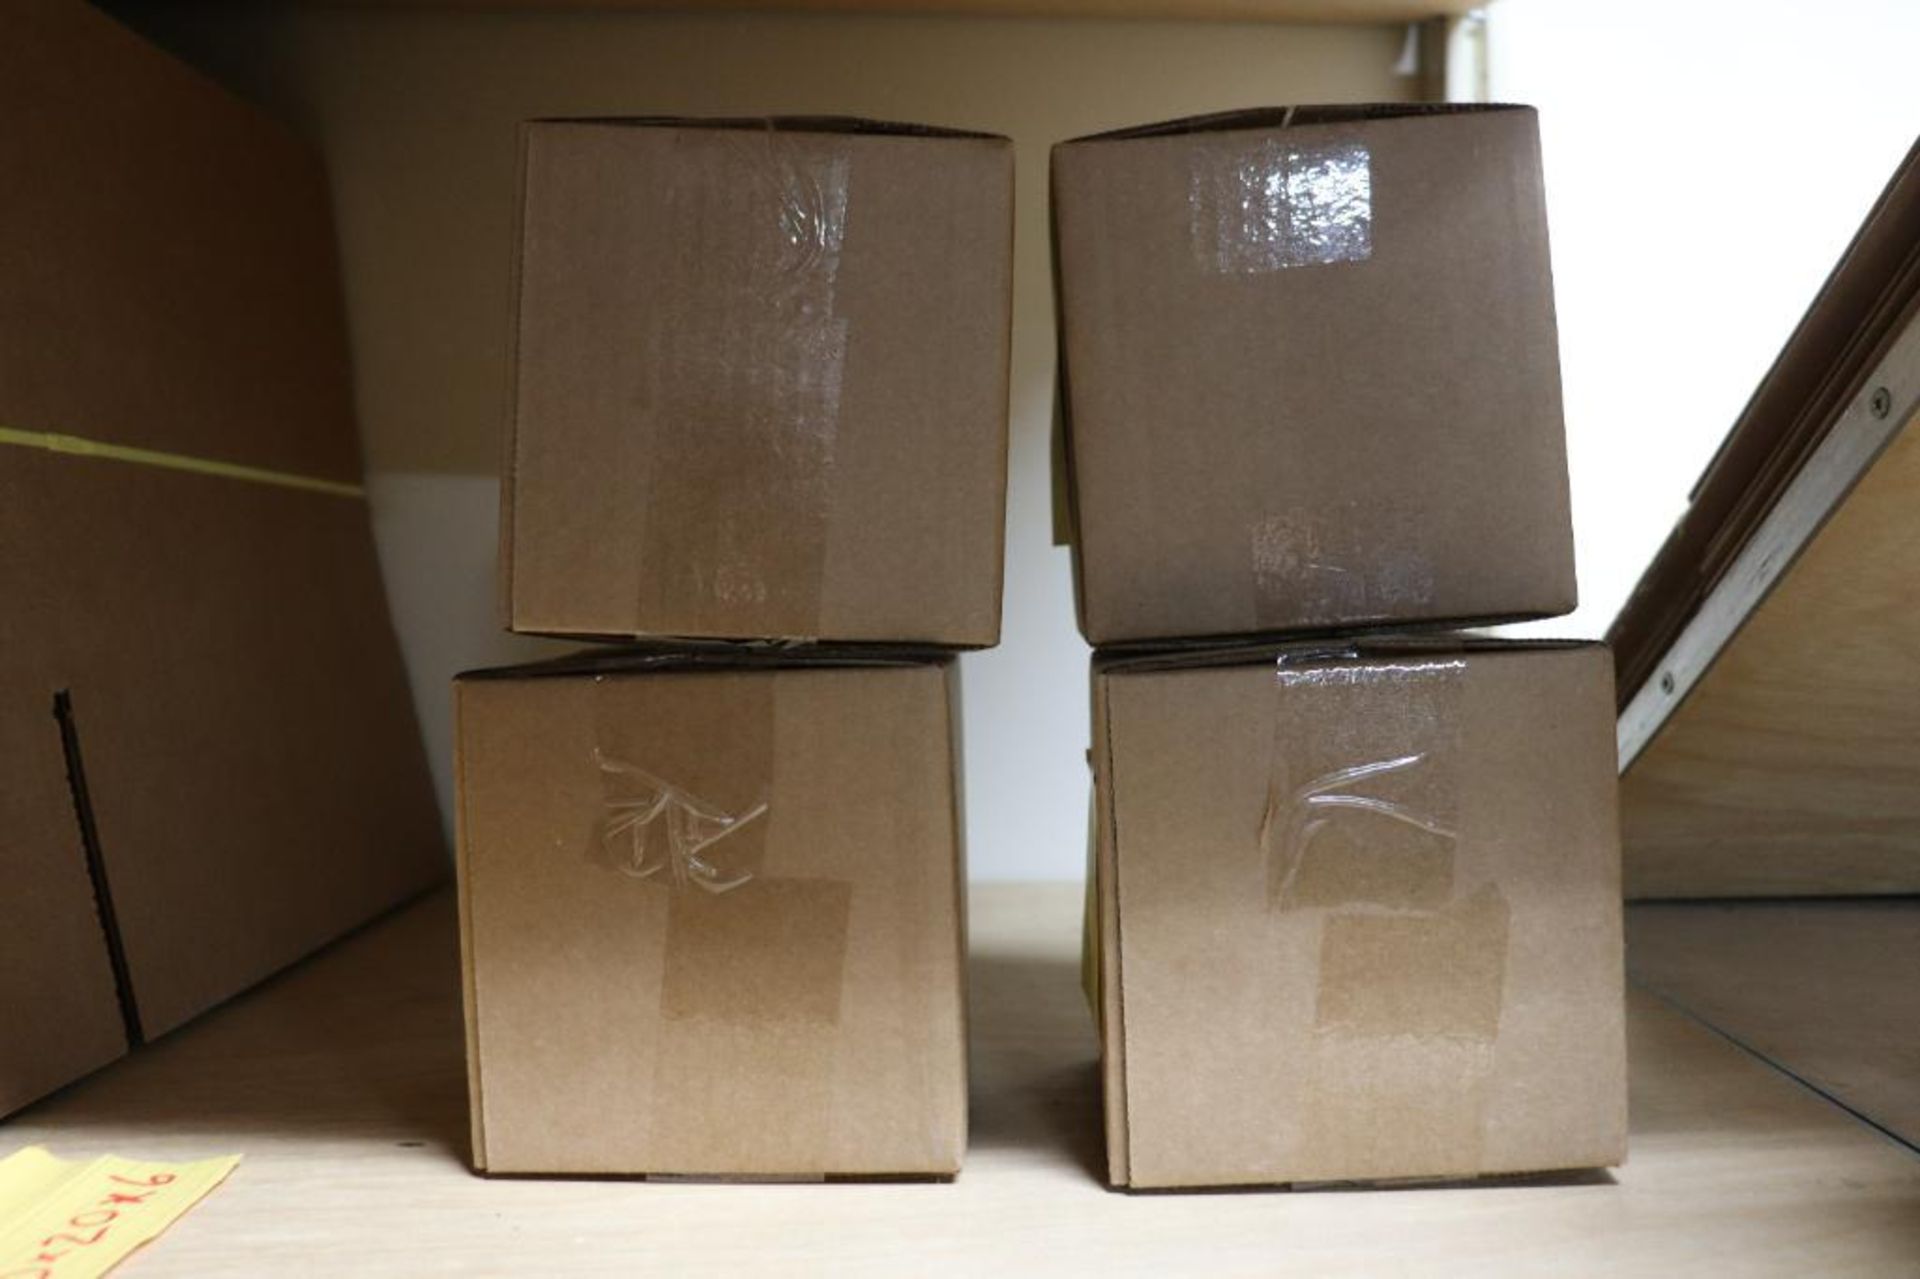 Uline cardboard boxes - Image 7 of 25